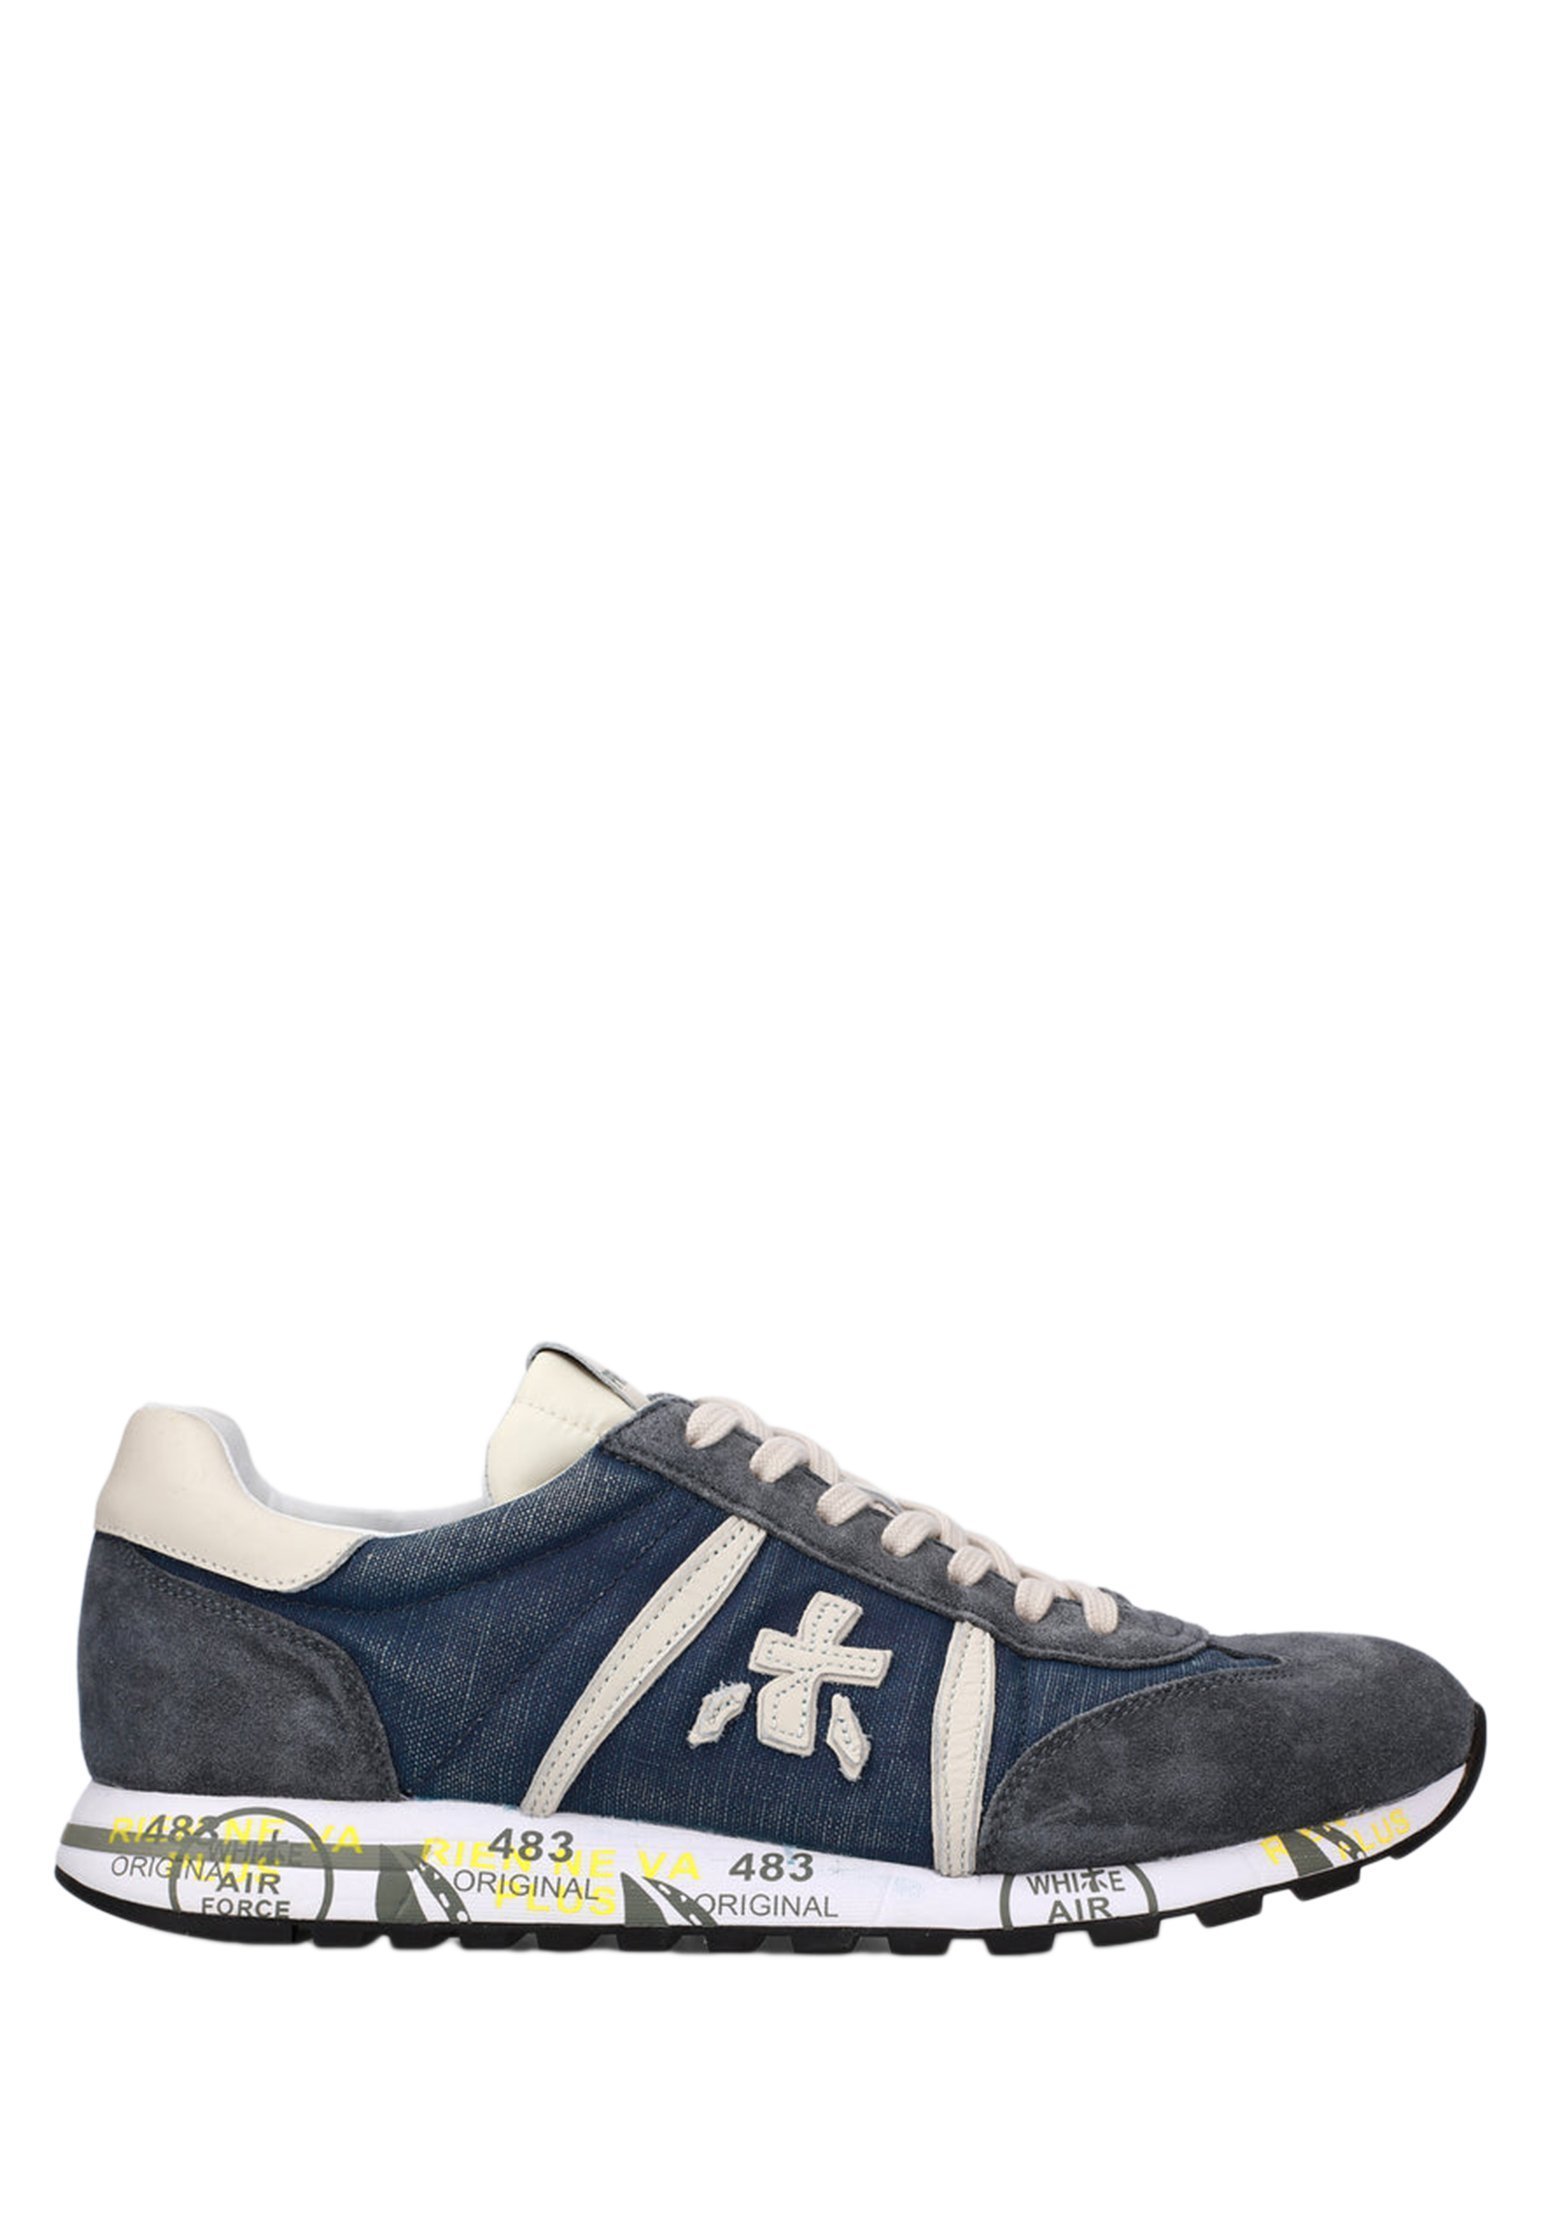 Sneakers PREMIATA Color: grey (Code: 4196) in online store Allure